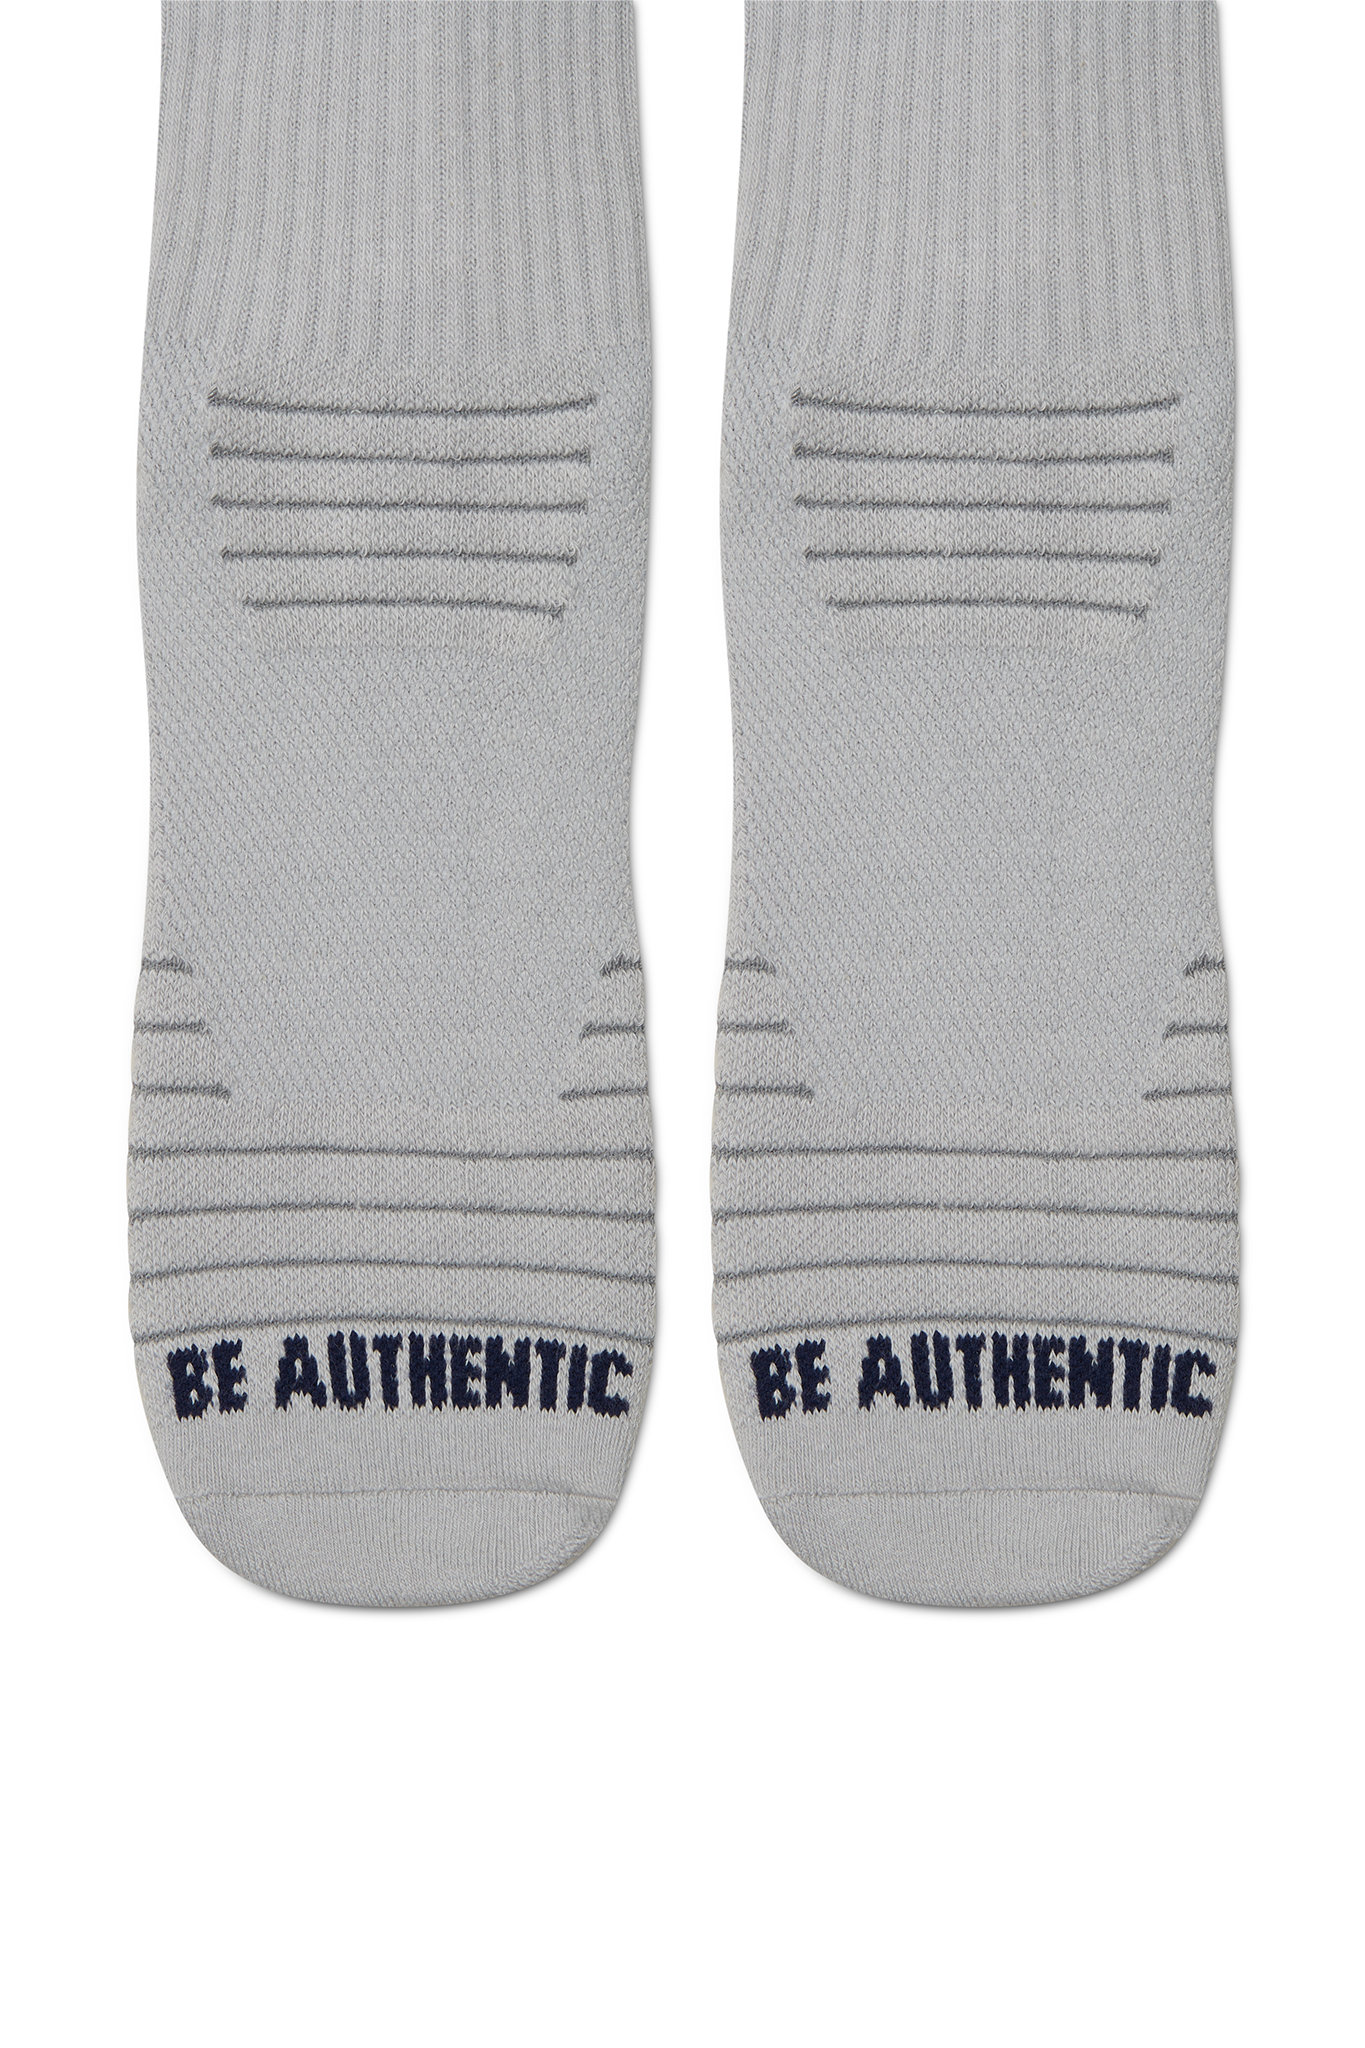 Eastside Golf Calf Height Logo Socks Grey